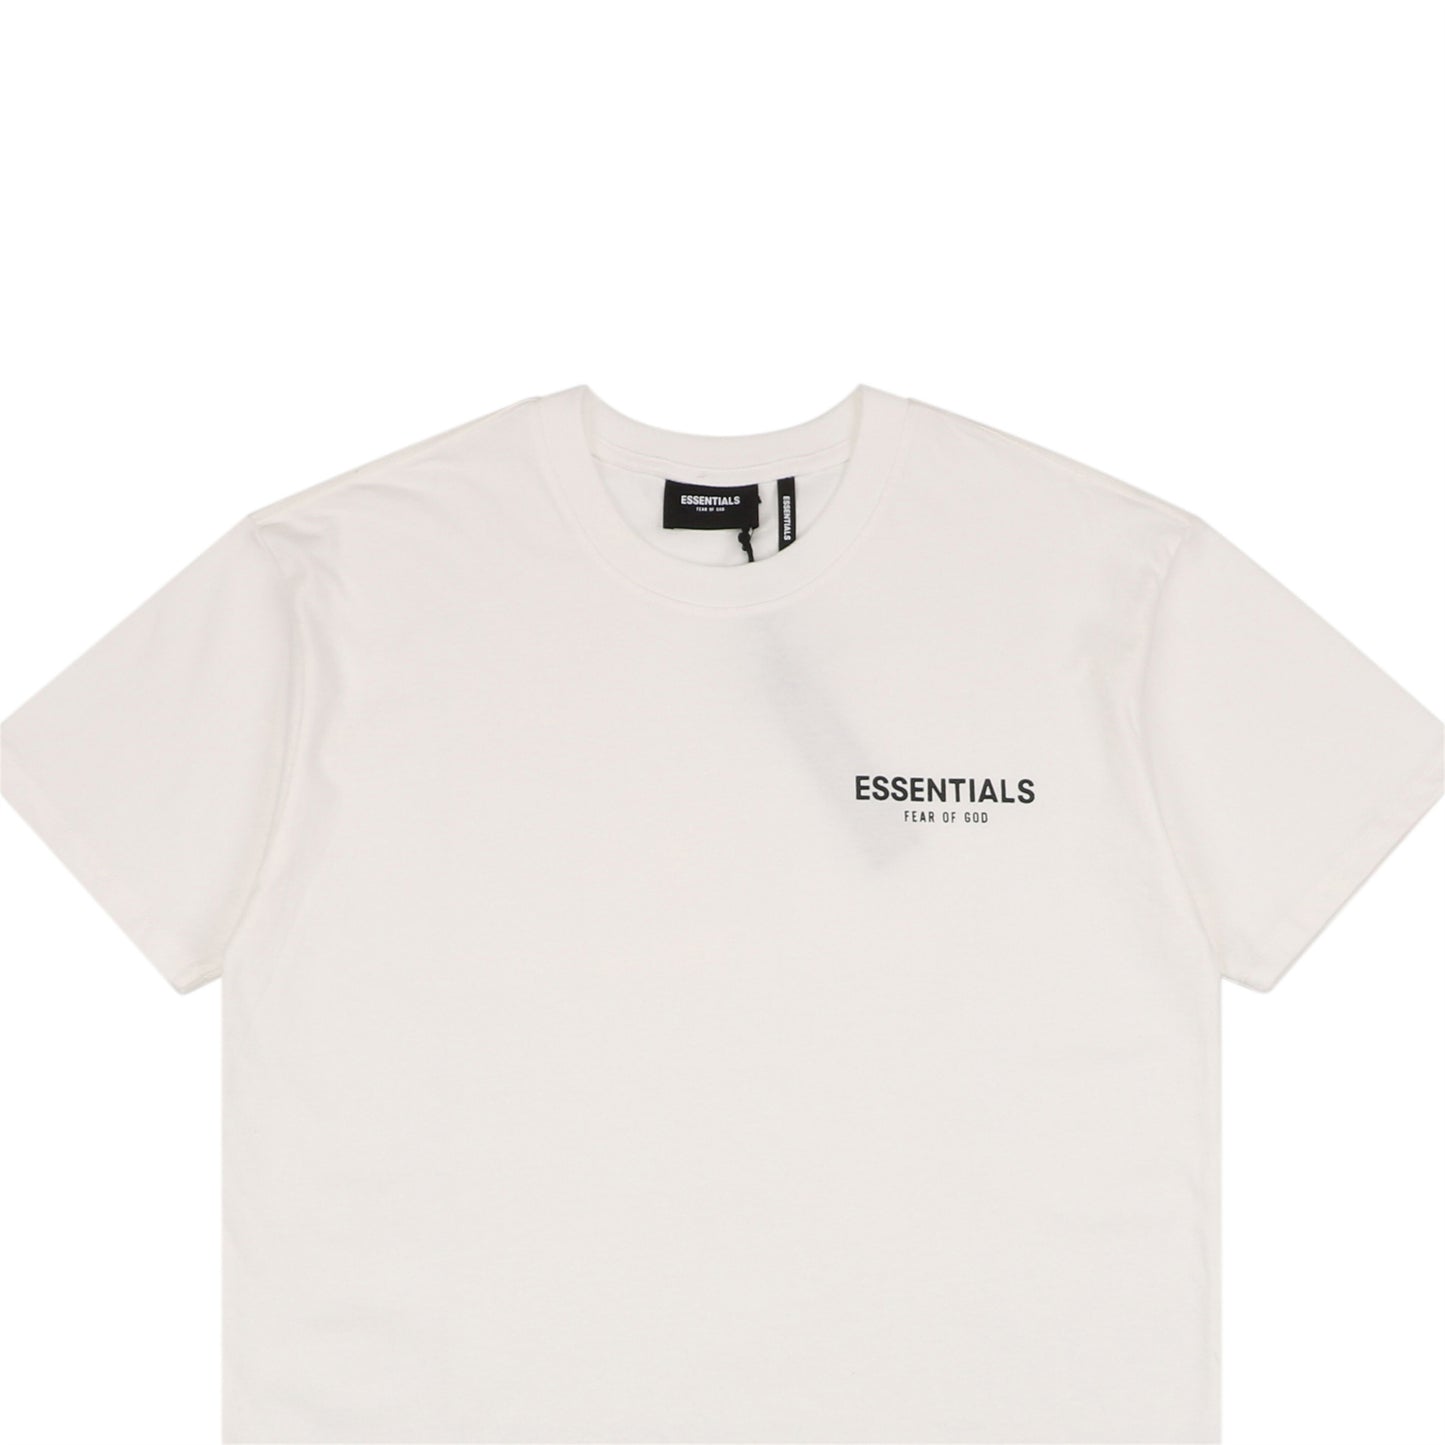 FOG White E55ential5 T-Shirt 2